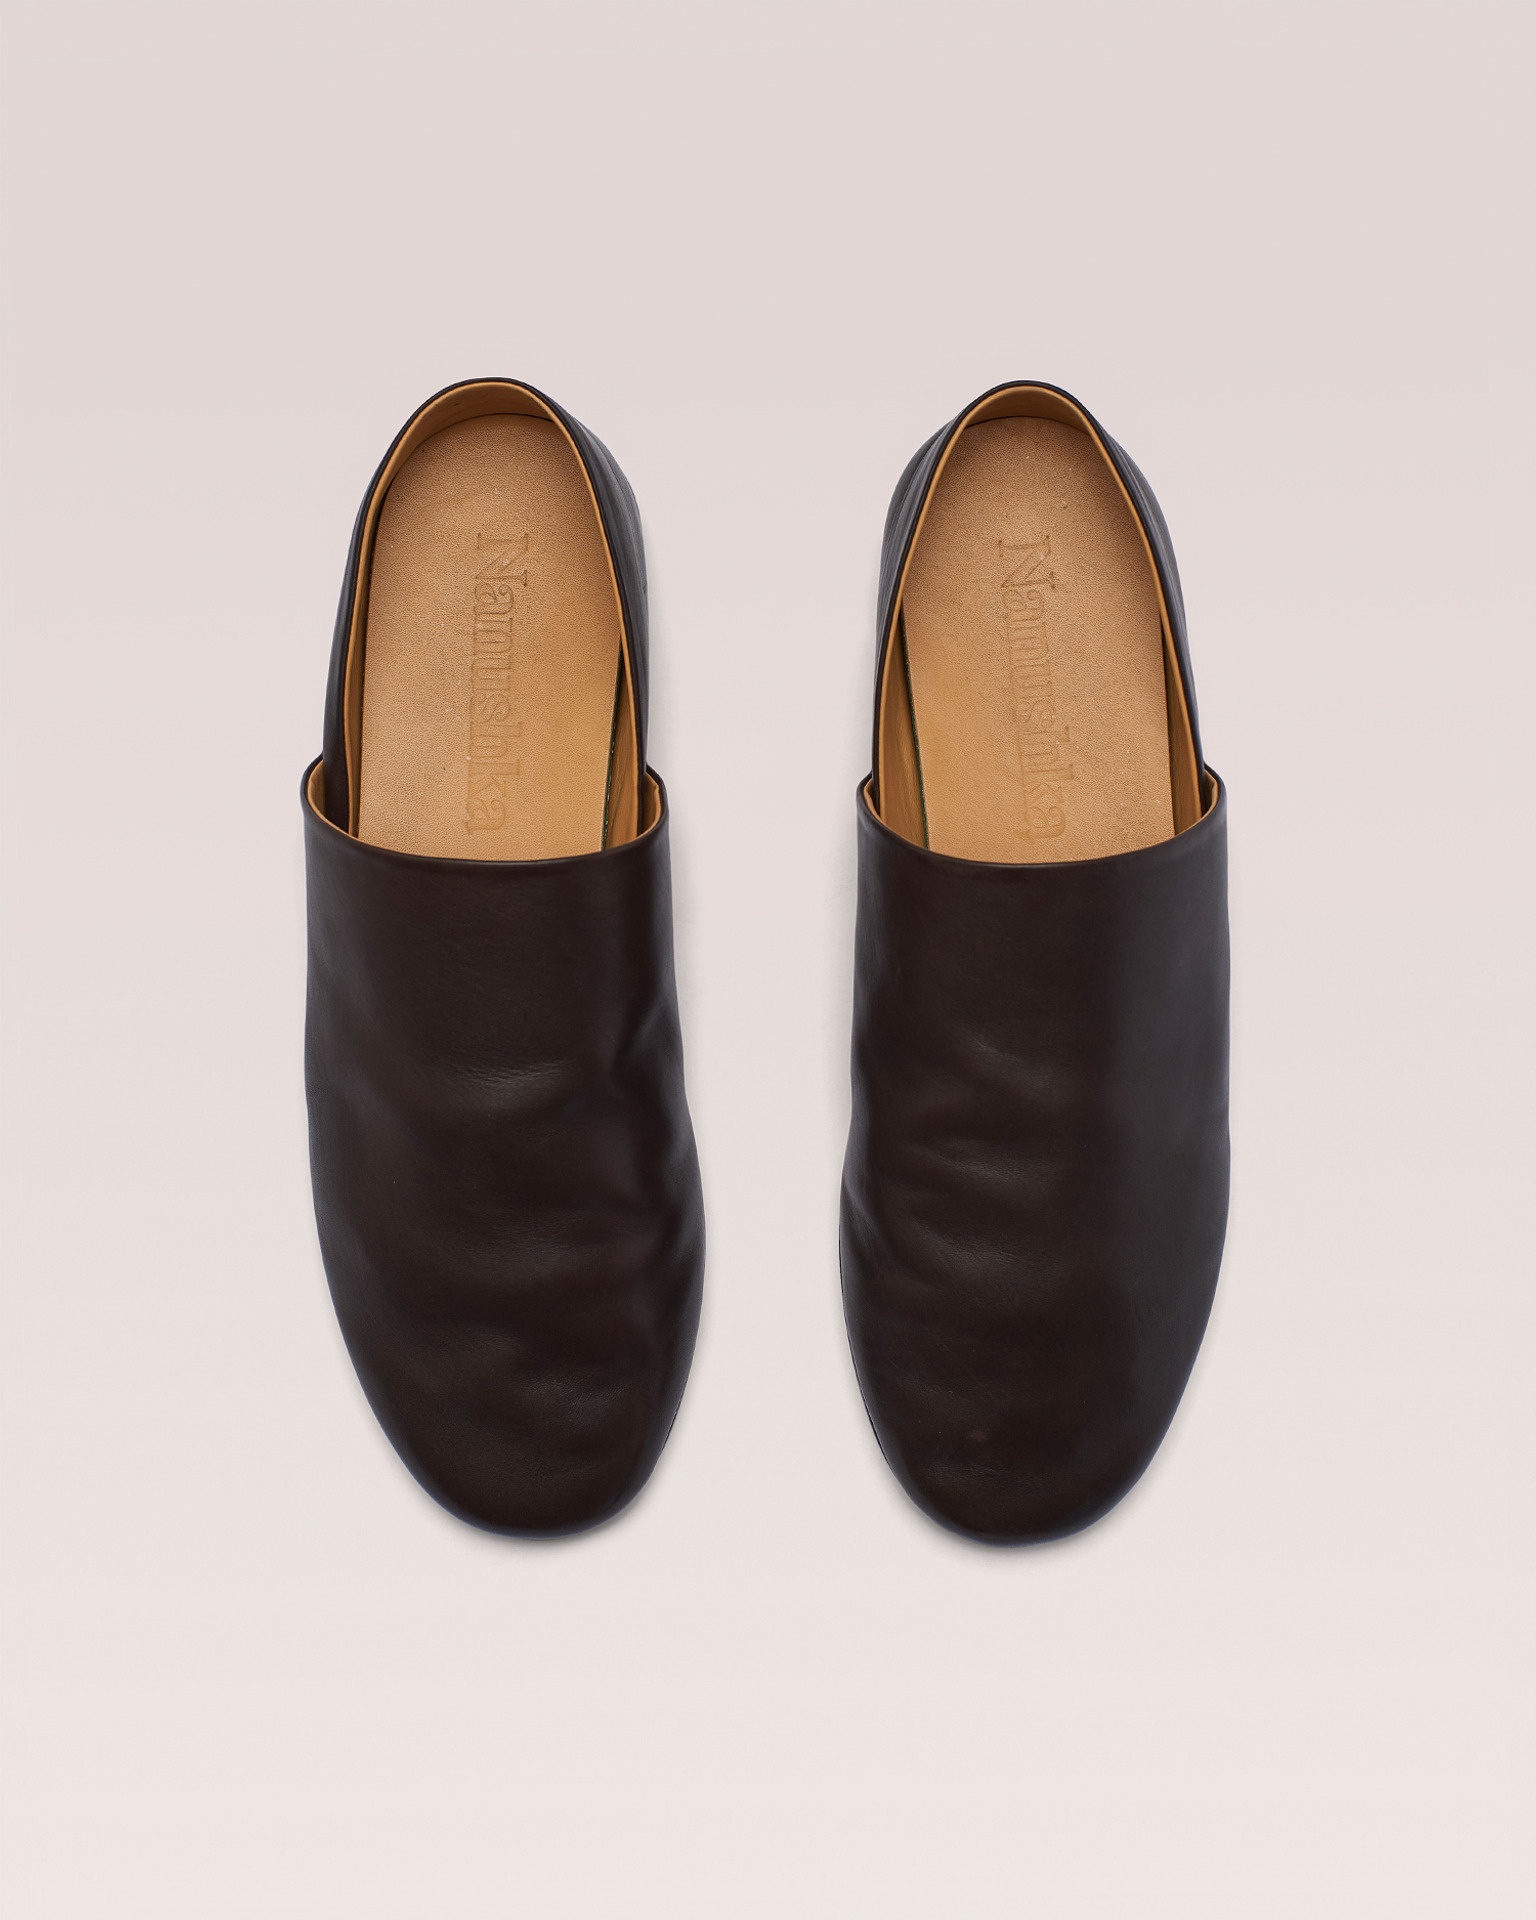 LINO STUD - Studded leather slip-on shoes - Dark chocolate - 3